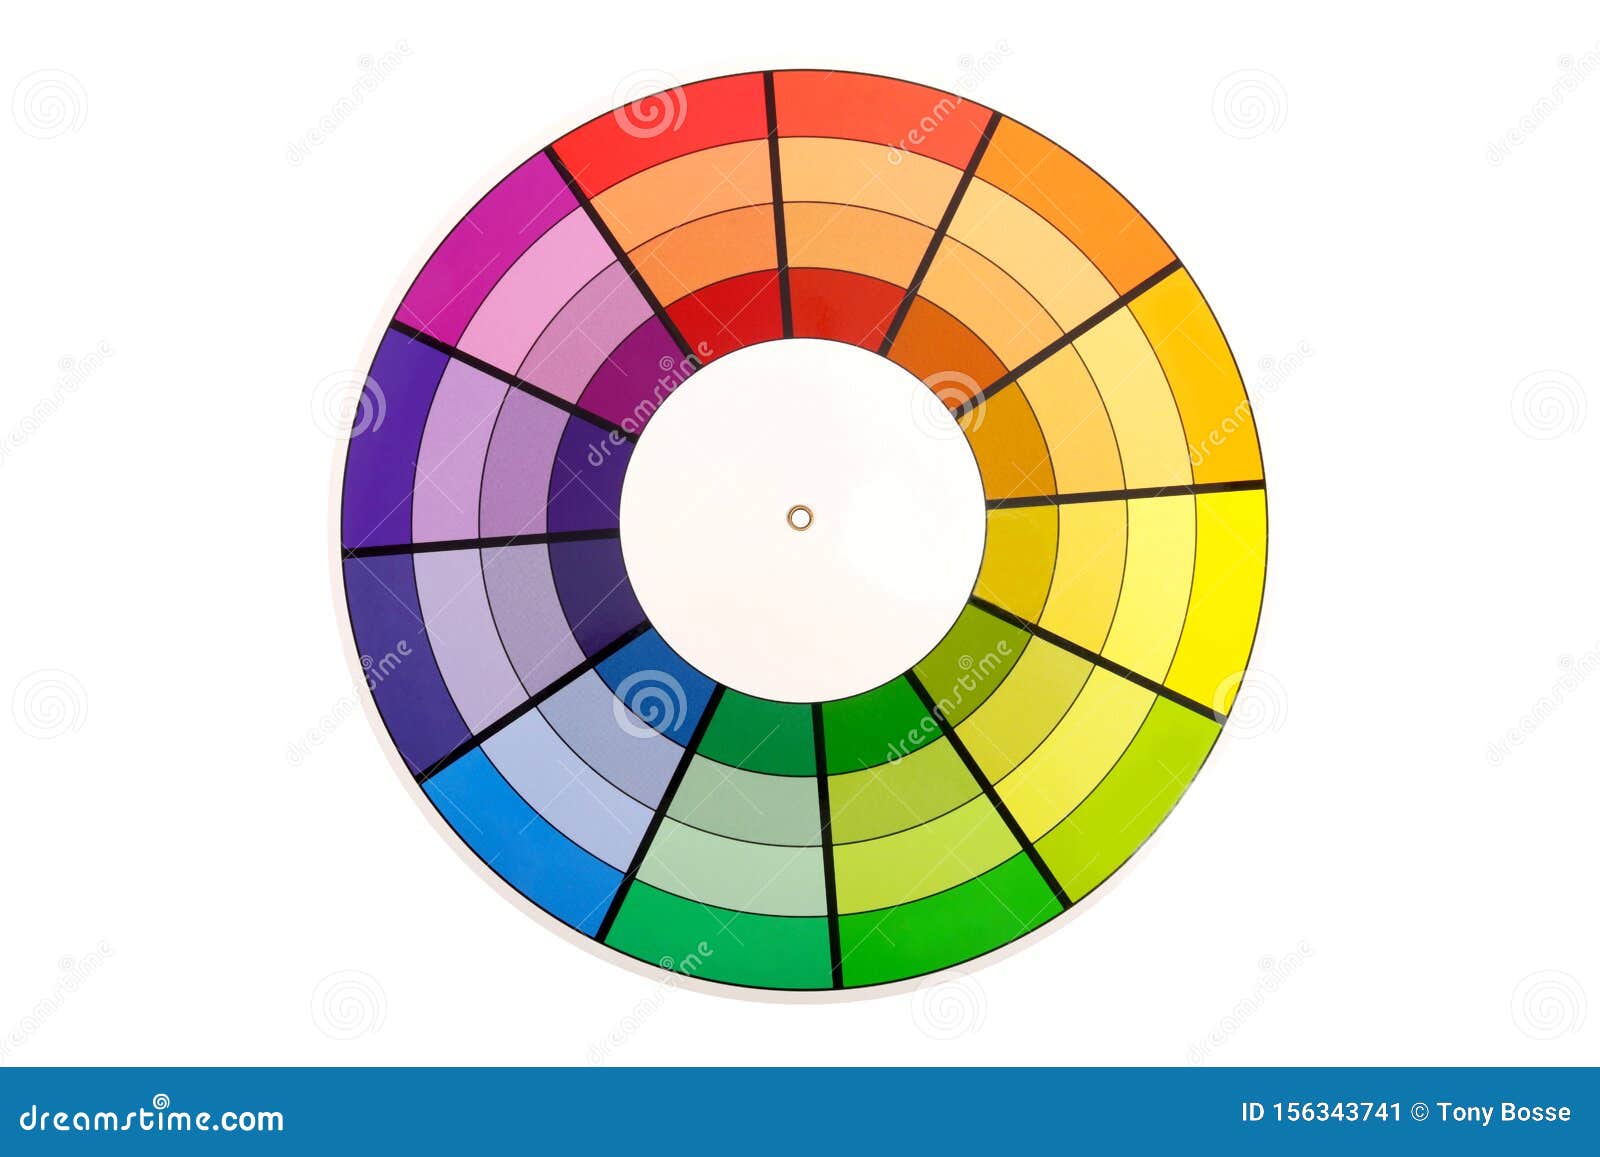 color selection wheel